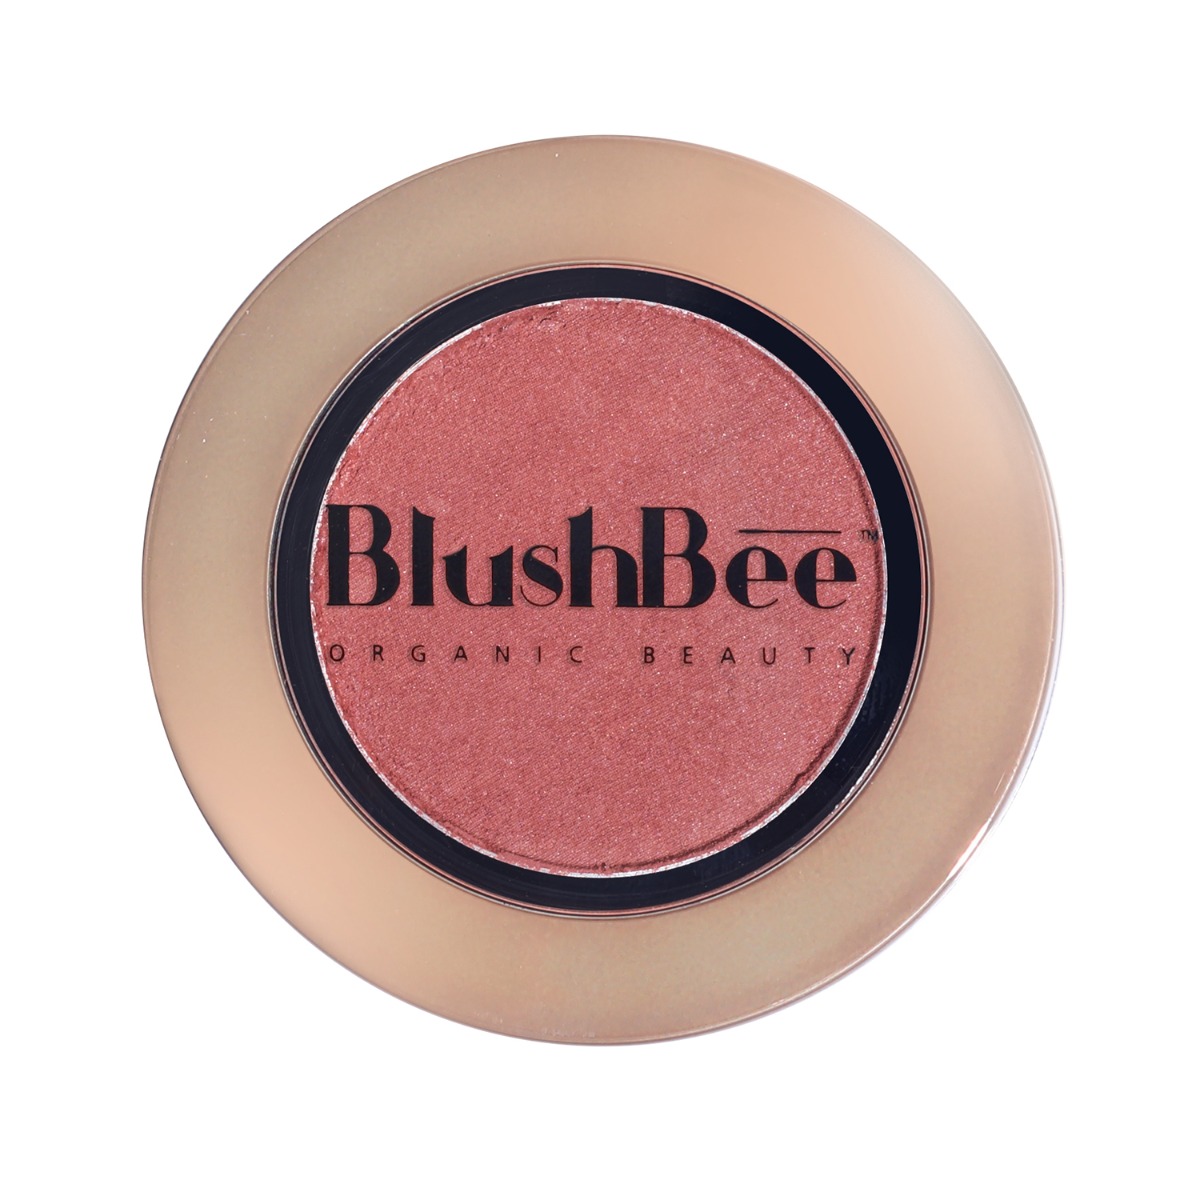 BlushBee Organic Beauty Natural Glow Organic Blush - Sextans, 2.3gm